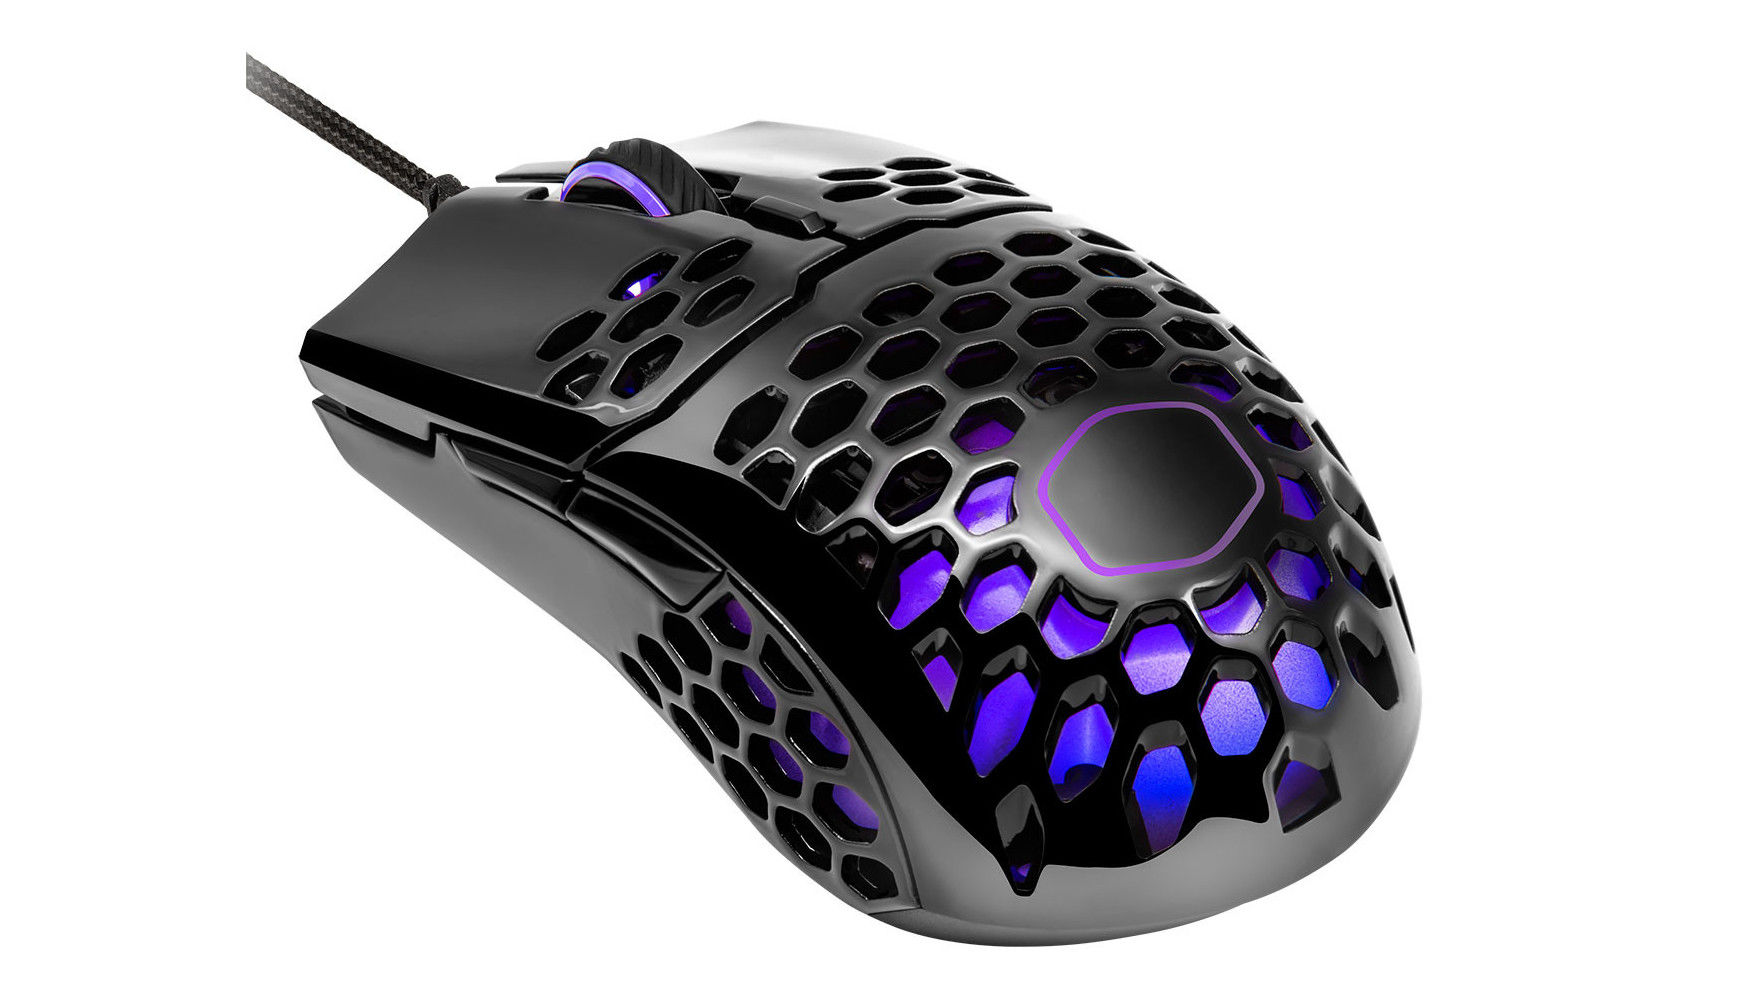 More information about "Η Cooler Master παρουσιάζει το MM711 Lightweight Gaming Mouse και εκδοχές του MM710"